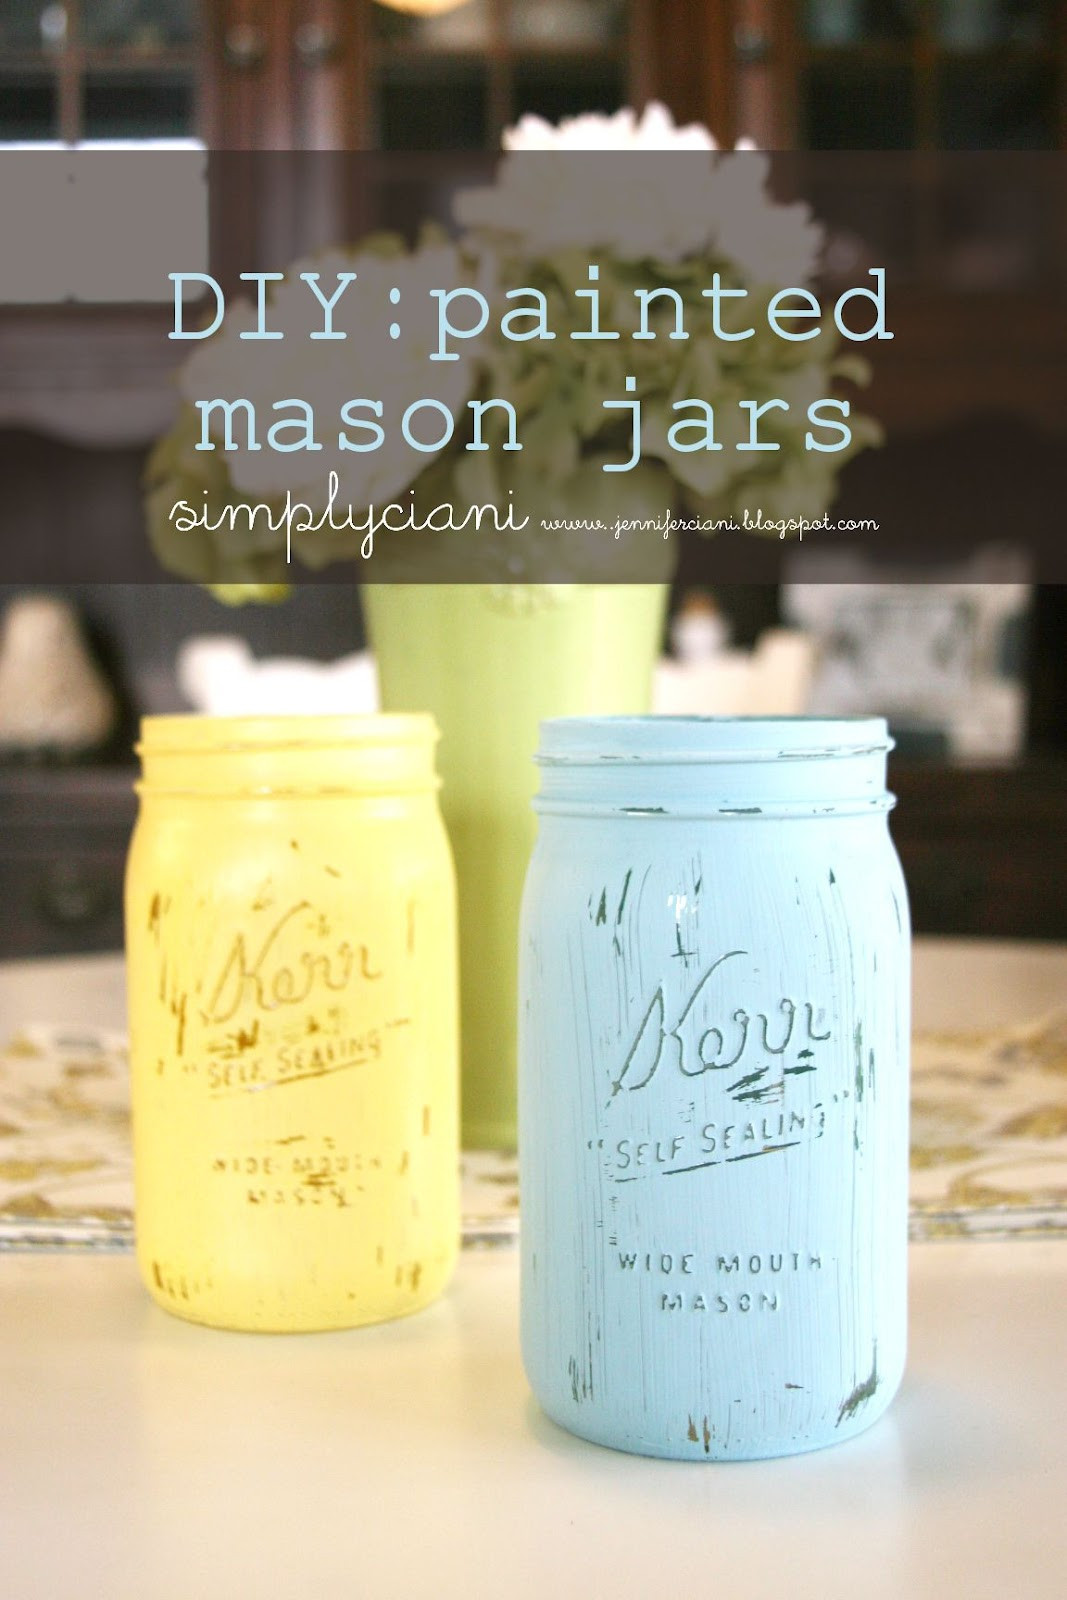 Best ideas about Mason Jar DIY
. Save or Pin DIY Painted Mason Jars Now.